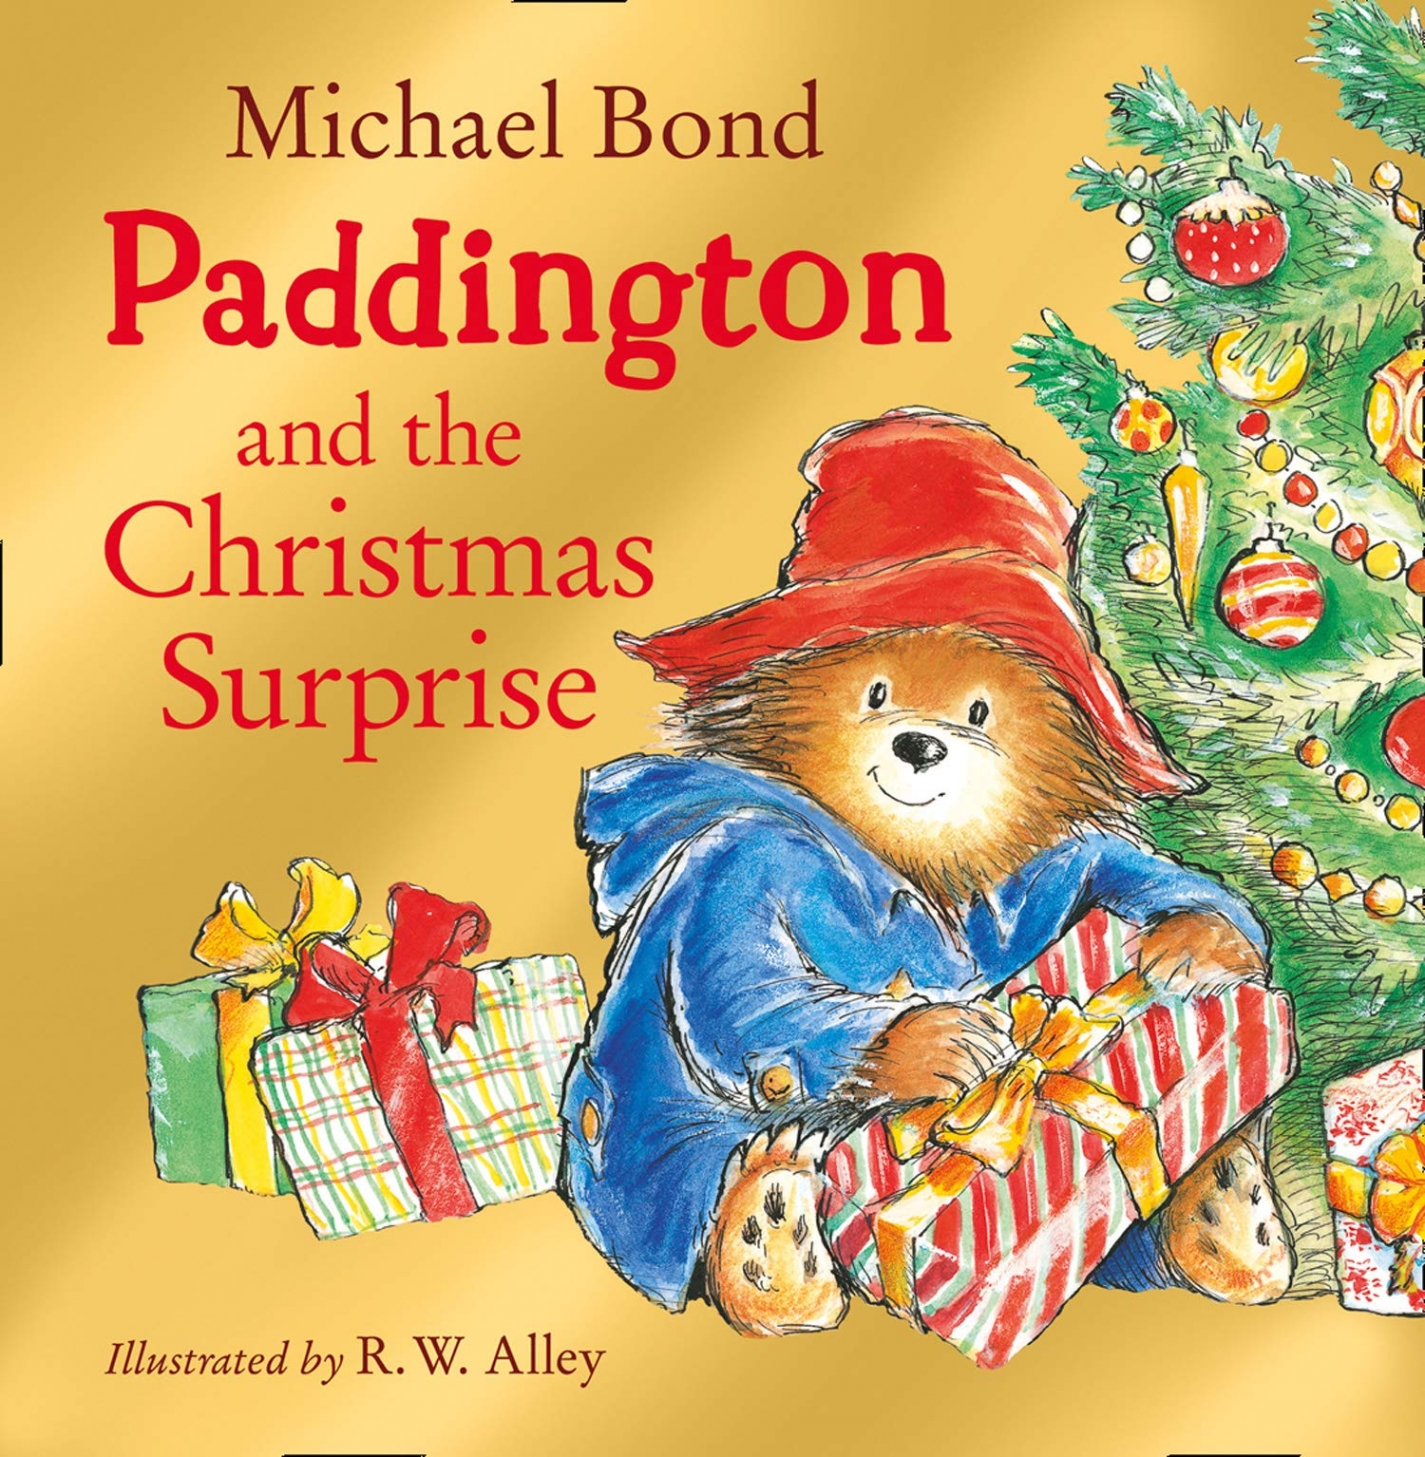 Michael B. Paddington and Christmas Surprise (illustr.) 